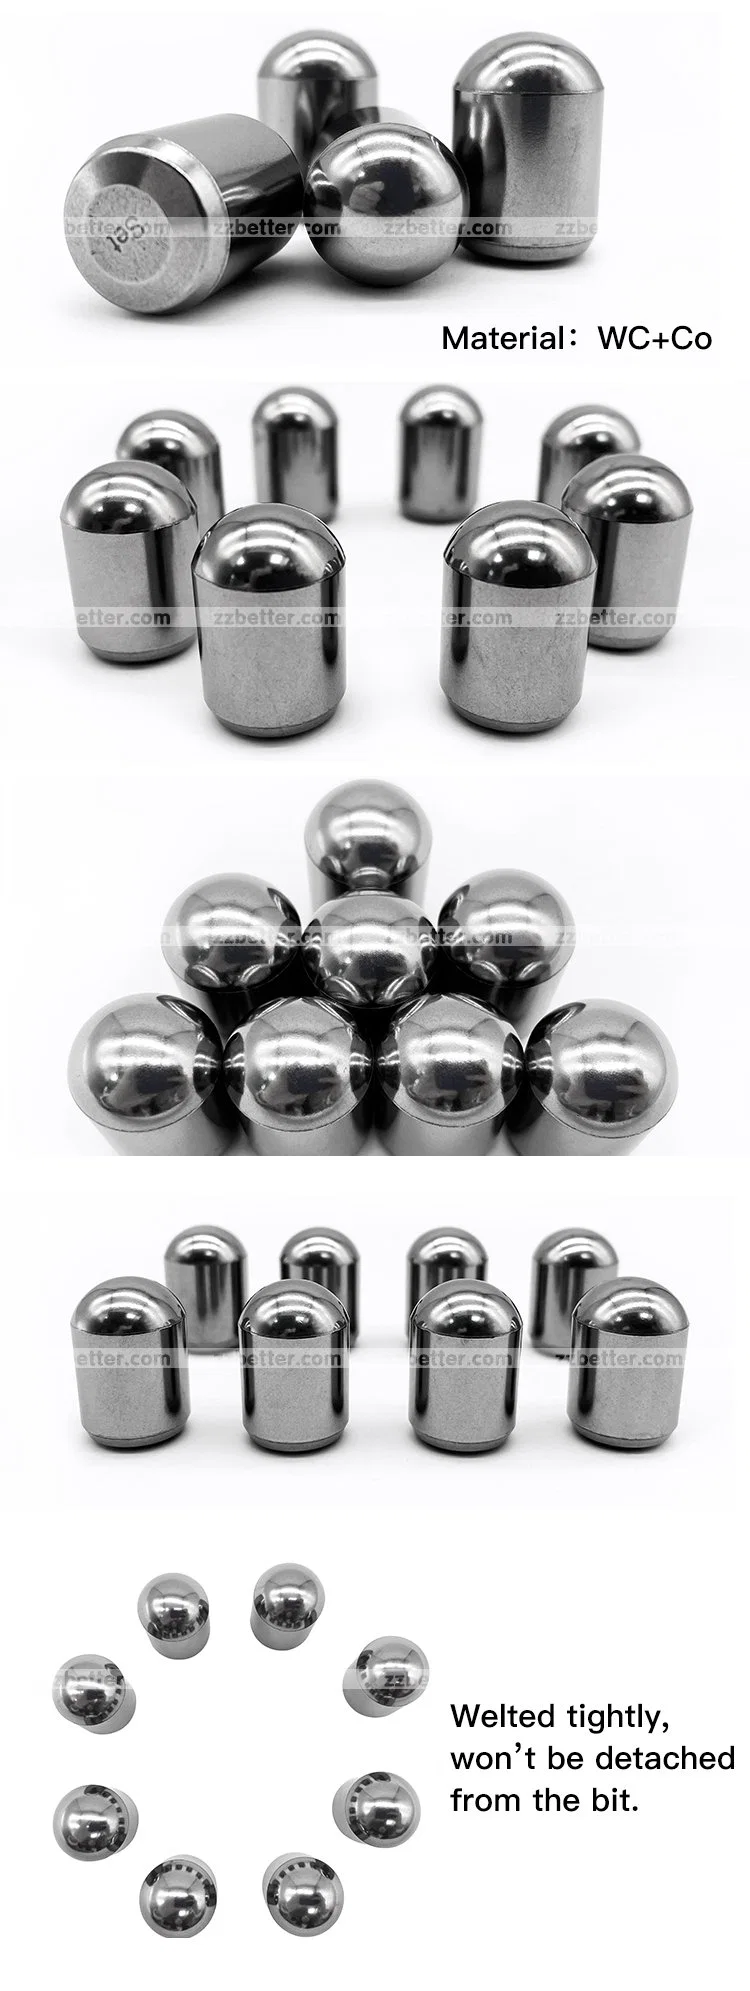 Tungsten Carbide Mining Tips for Button Drills